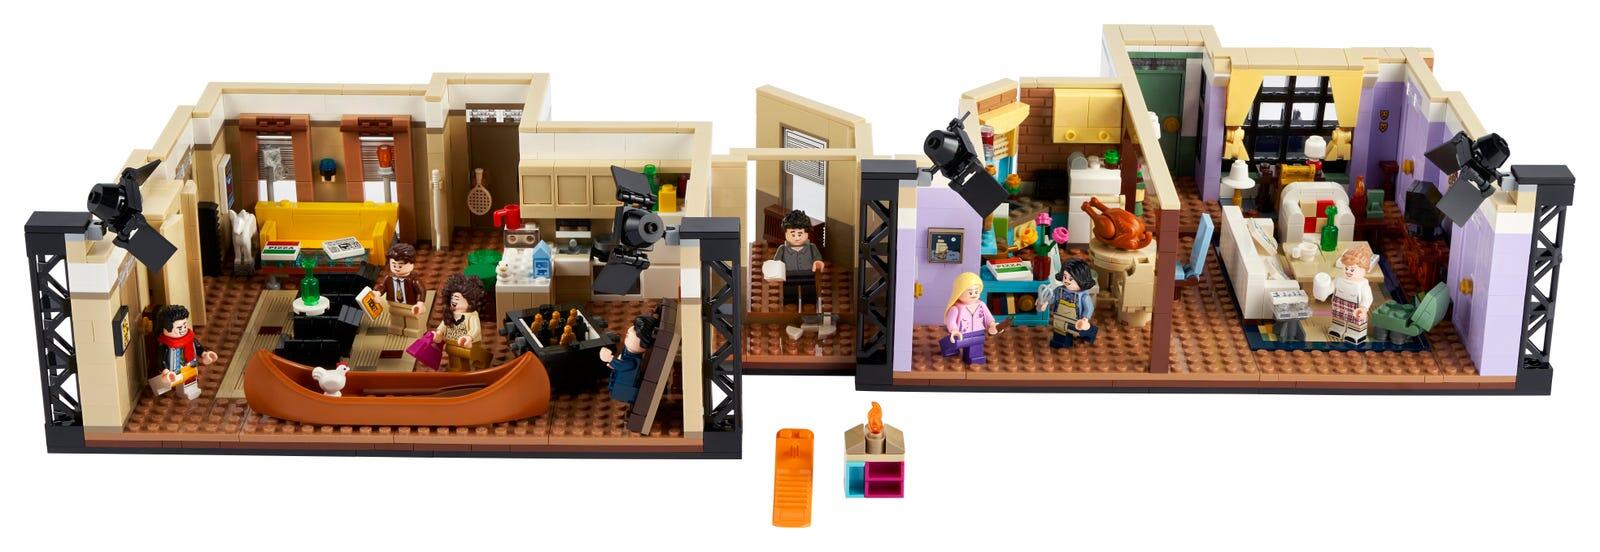 Acryl Vitrinen für Deine Lego Modelle-Lego 10292 Friends Apartments